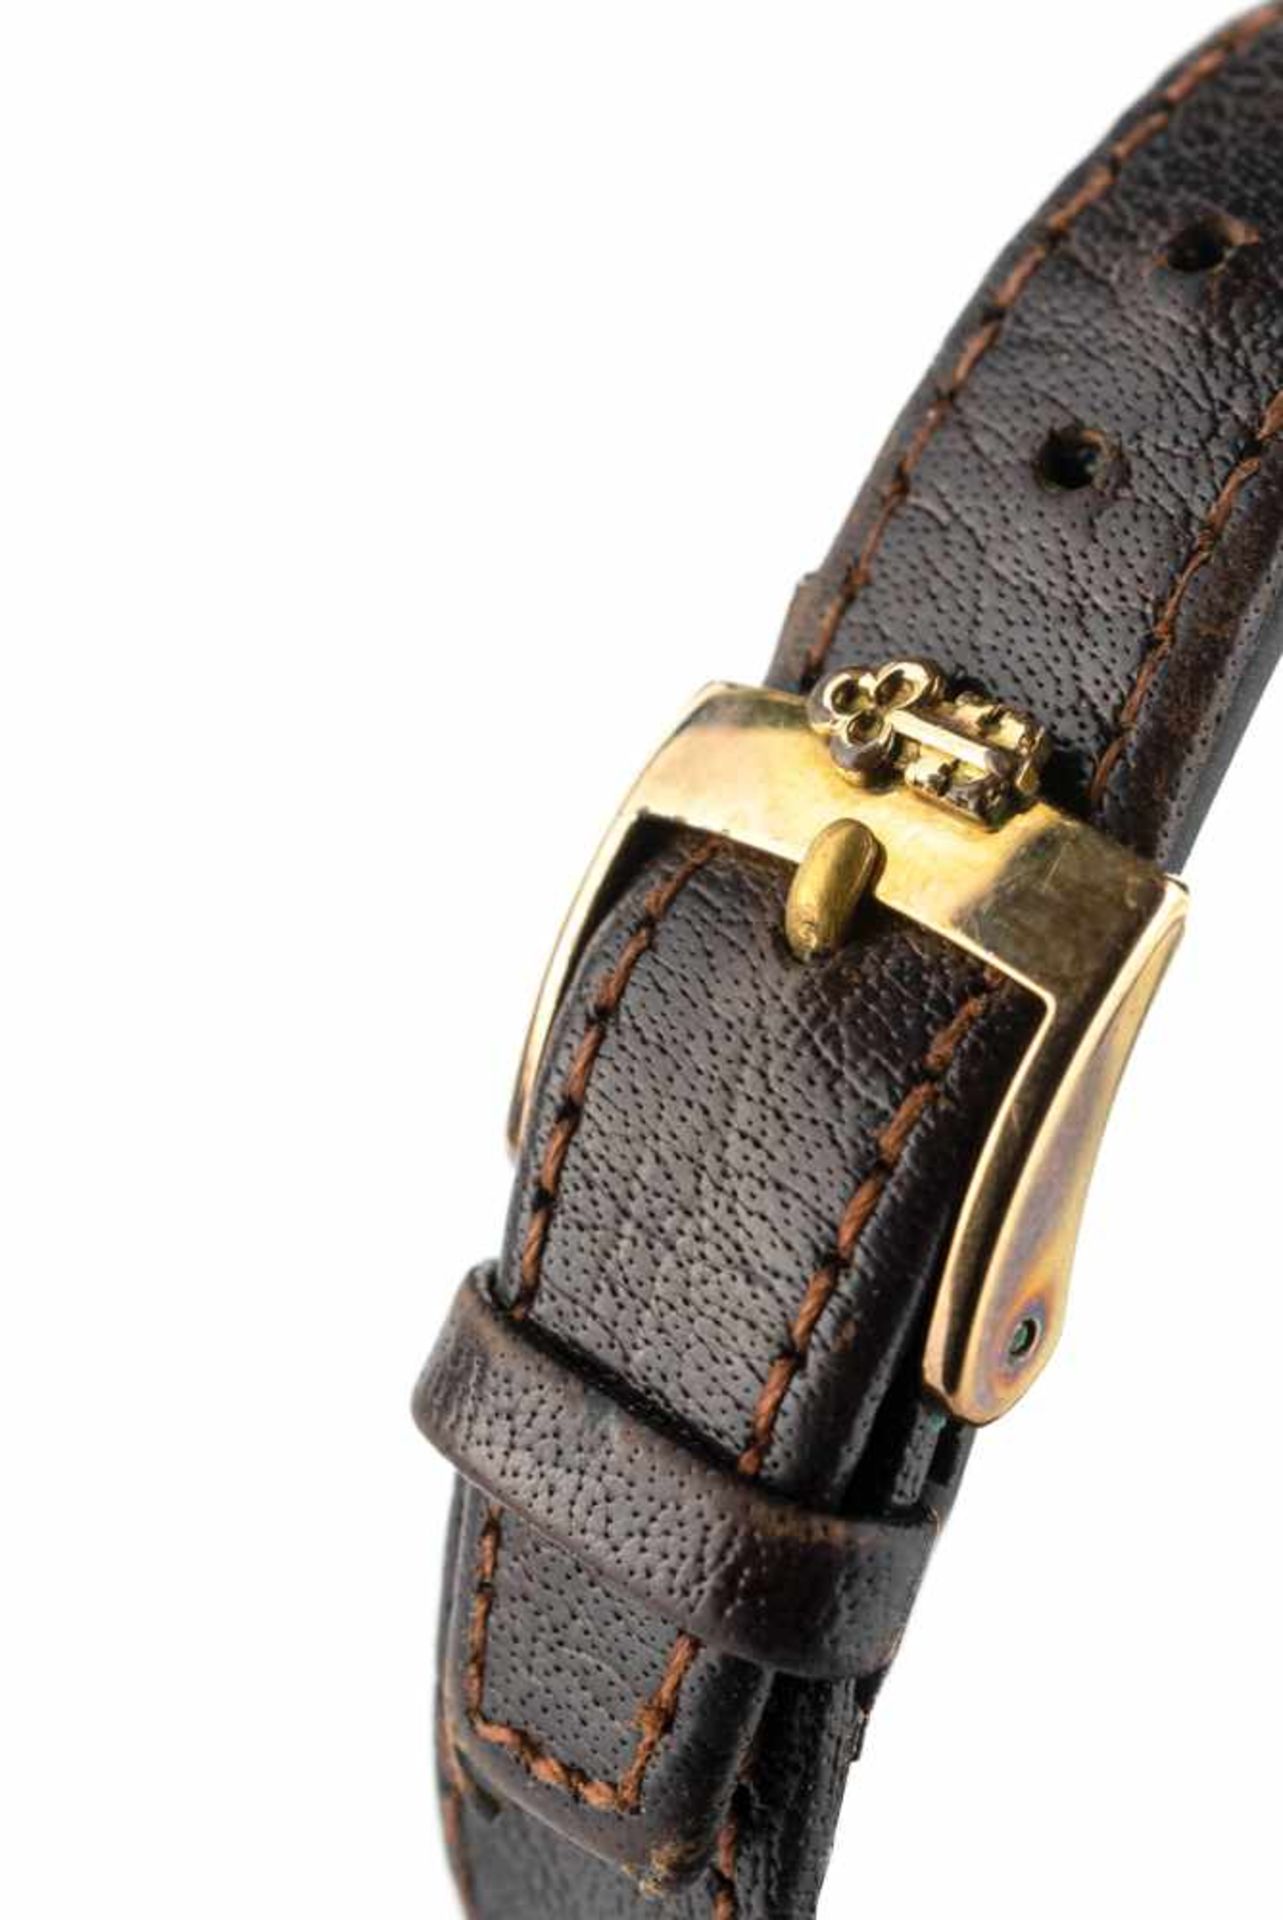 Corum Herrenarmbanduhr Handaufzug, Gehäuse 750 Gelbgold, punziert, Maße 33 mm x 28 mm, Armband - Image 3 of 3